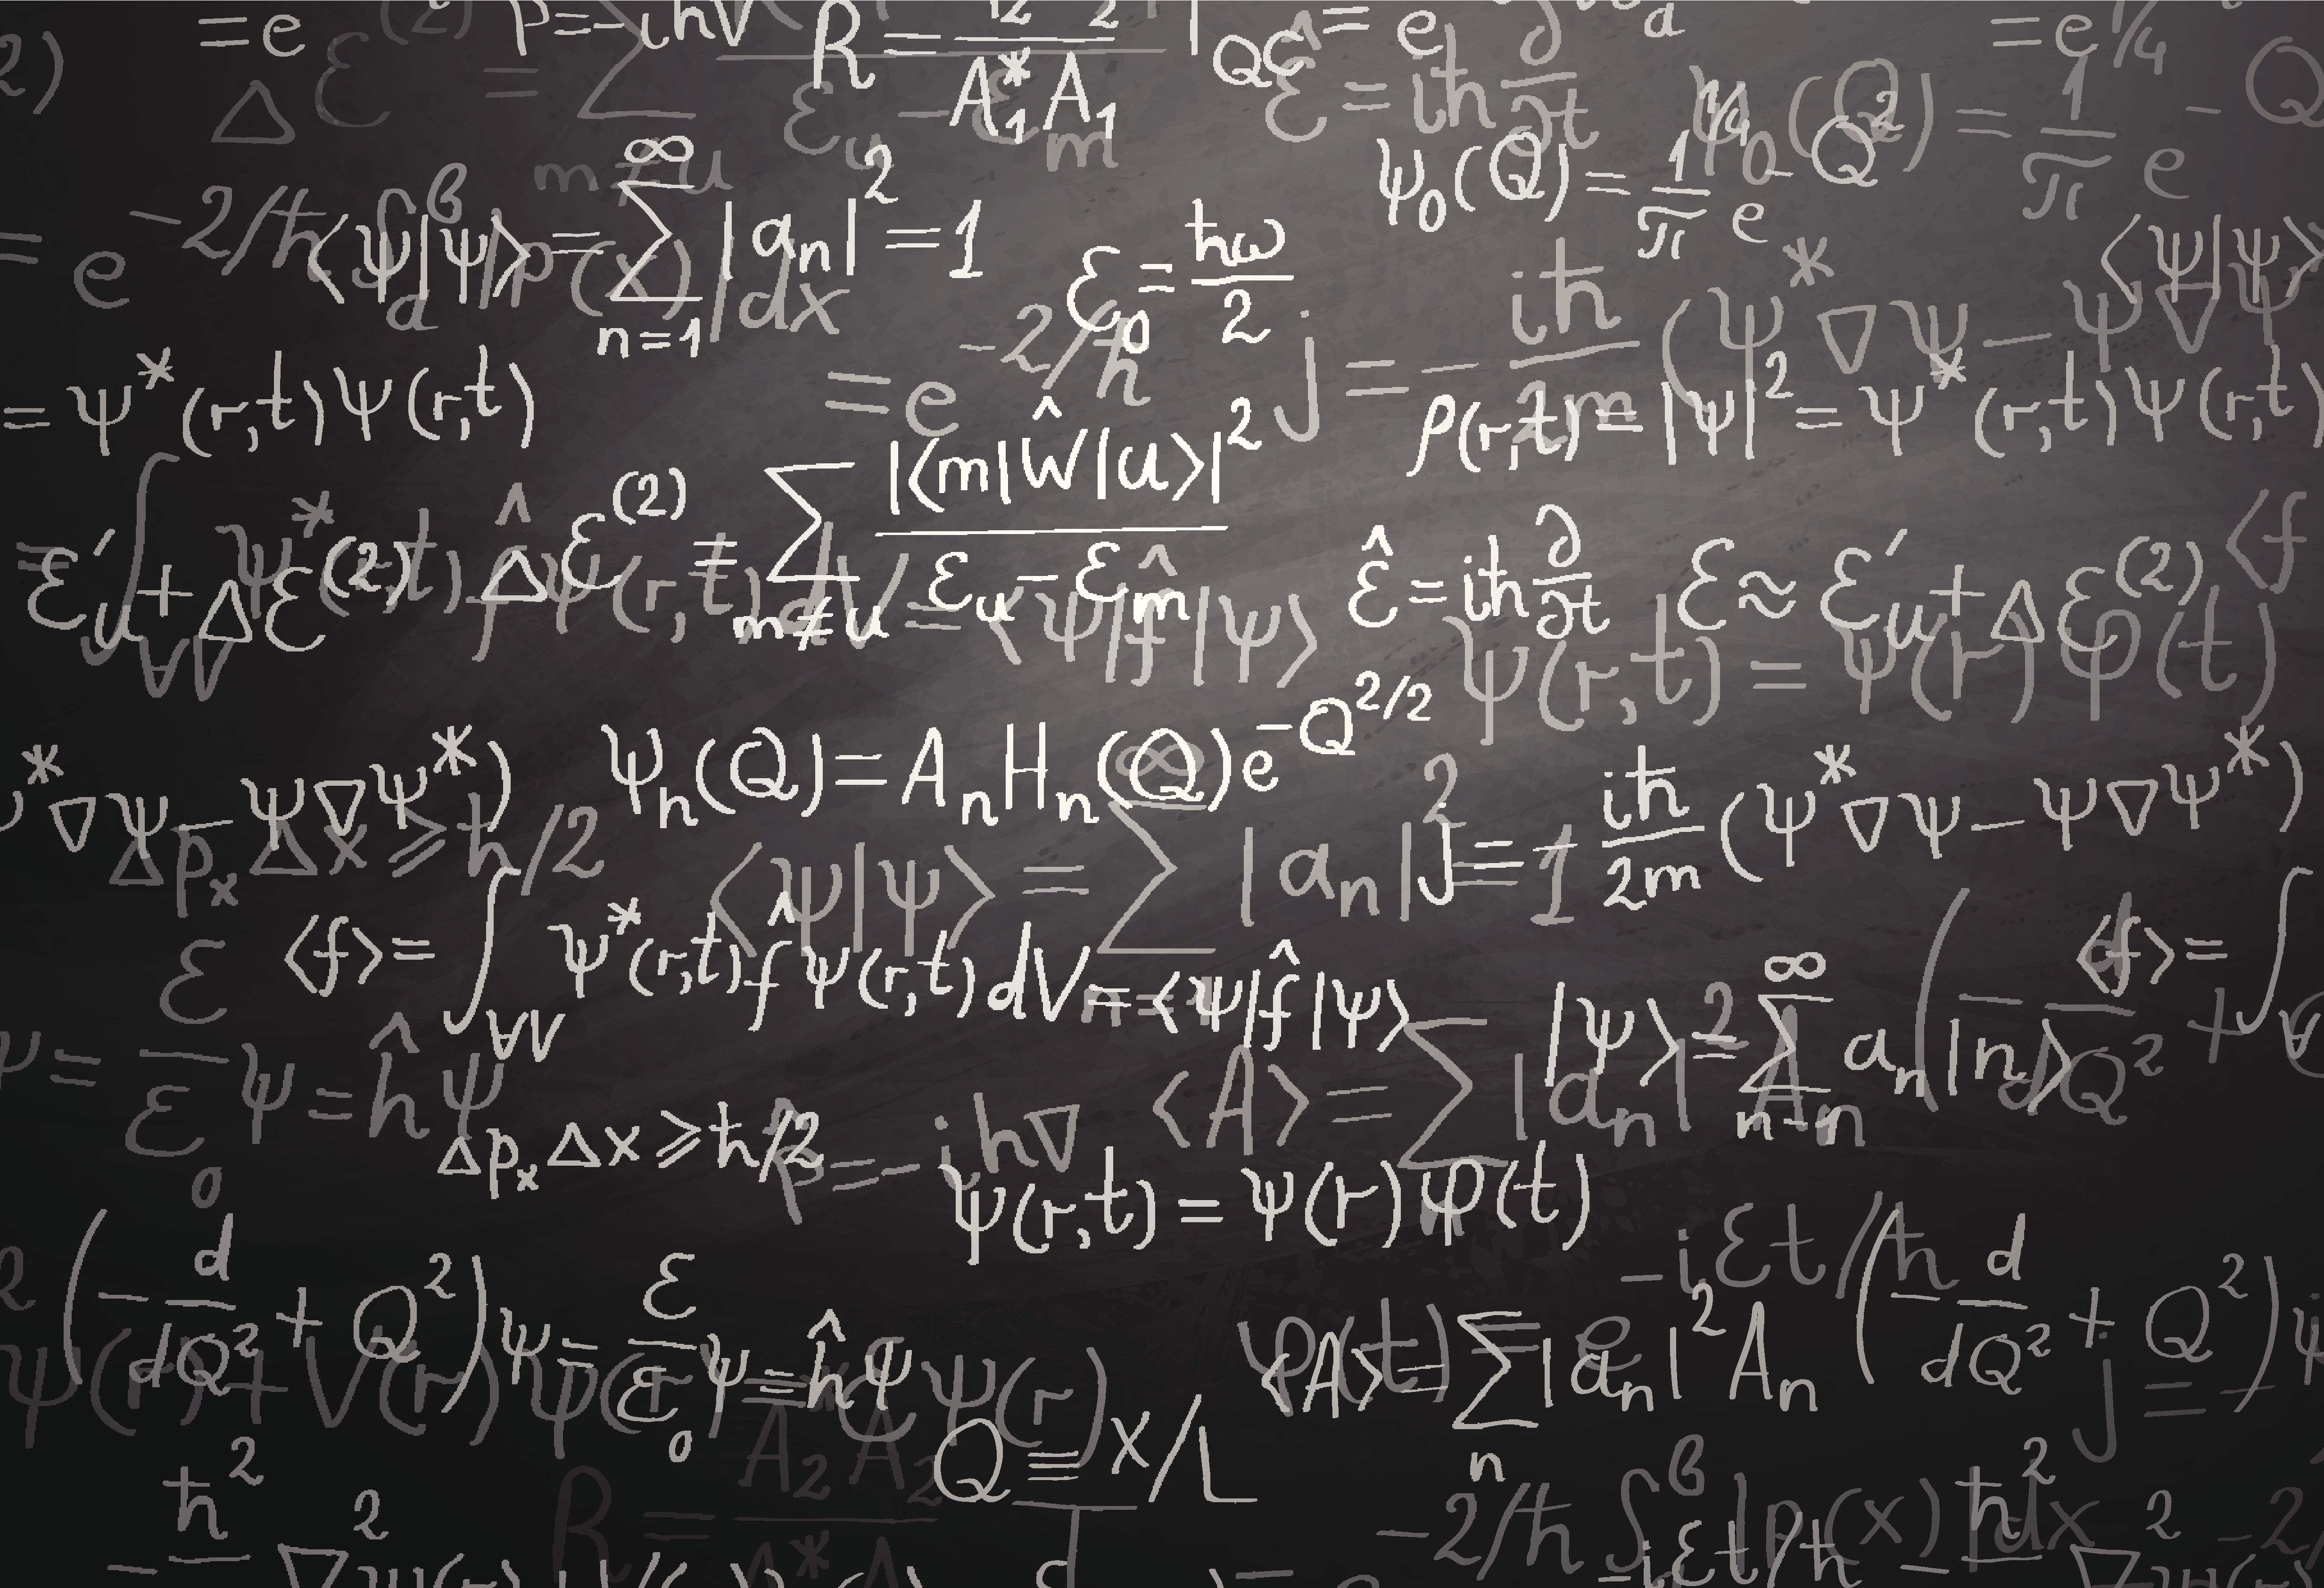 quantum-physics-formulas-over-blackboard-187852370-579632175f9b58173bbafc77.jpg